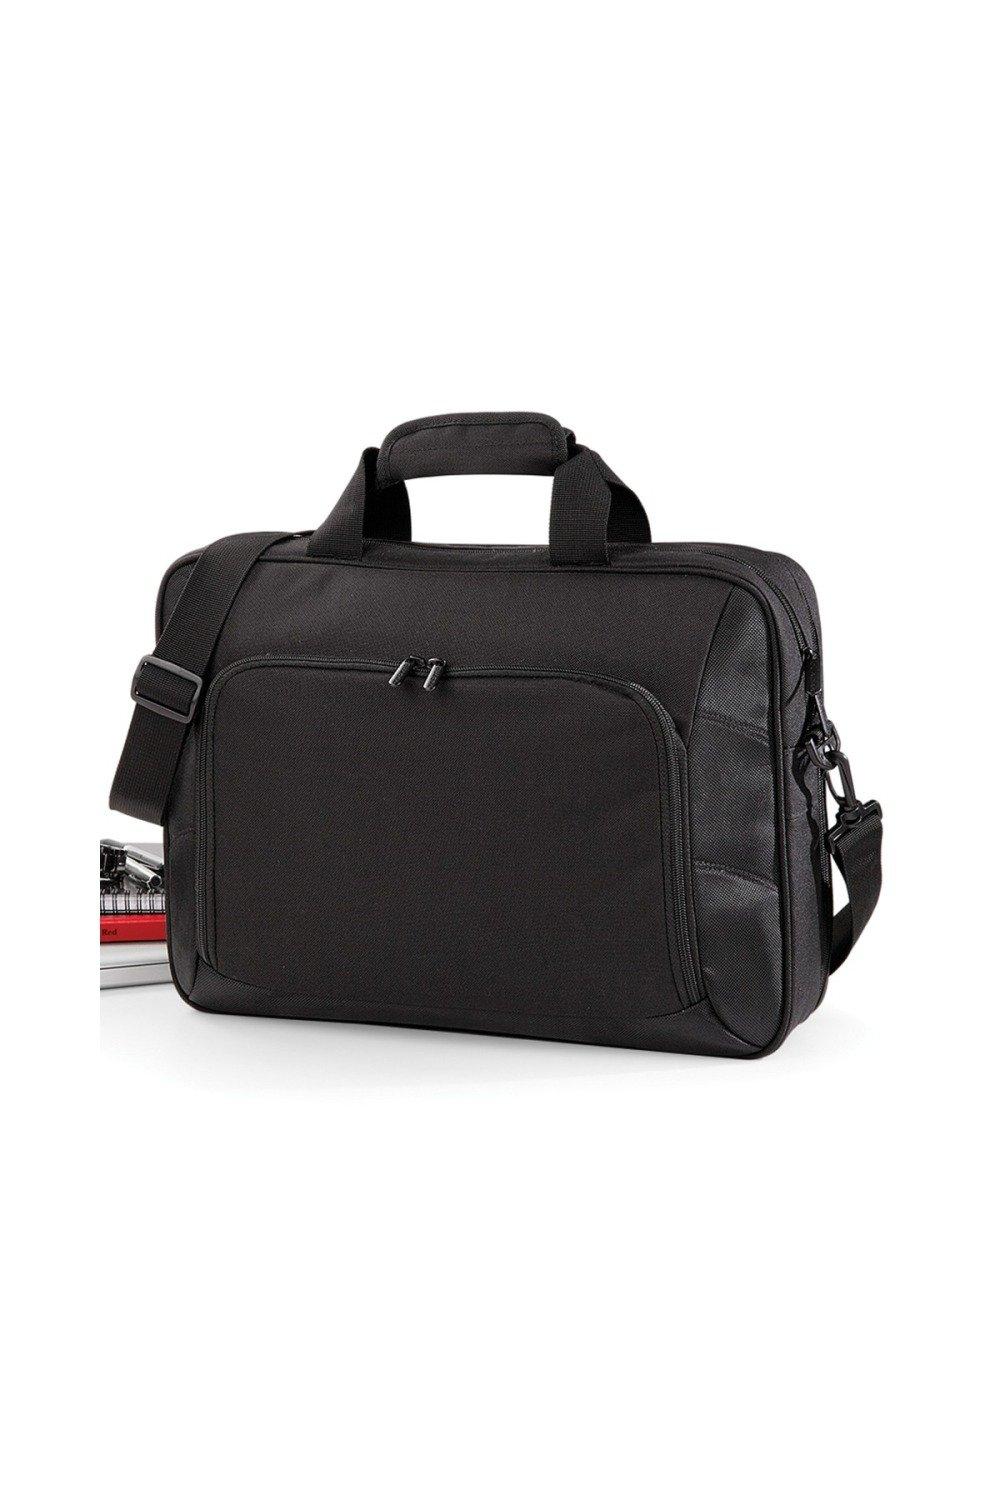 Executive Digital Office Bag (17inch Laptop Compatible)